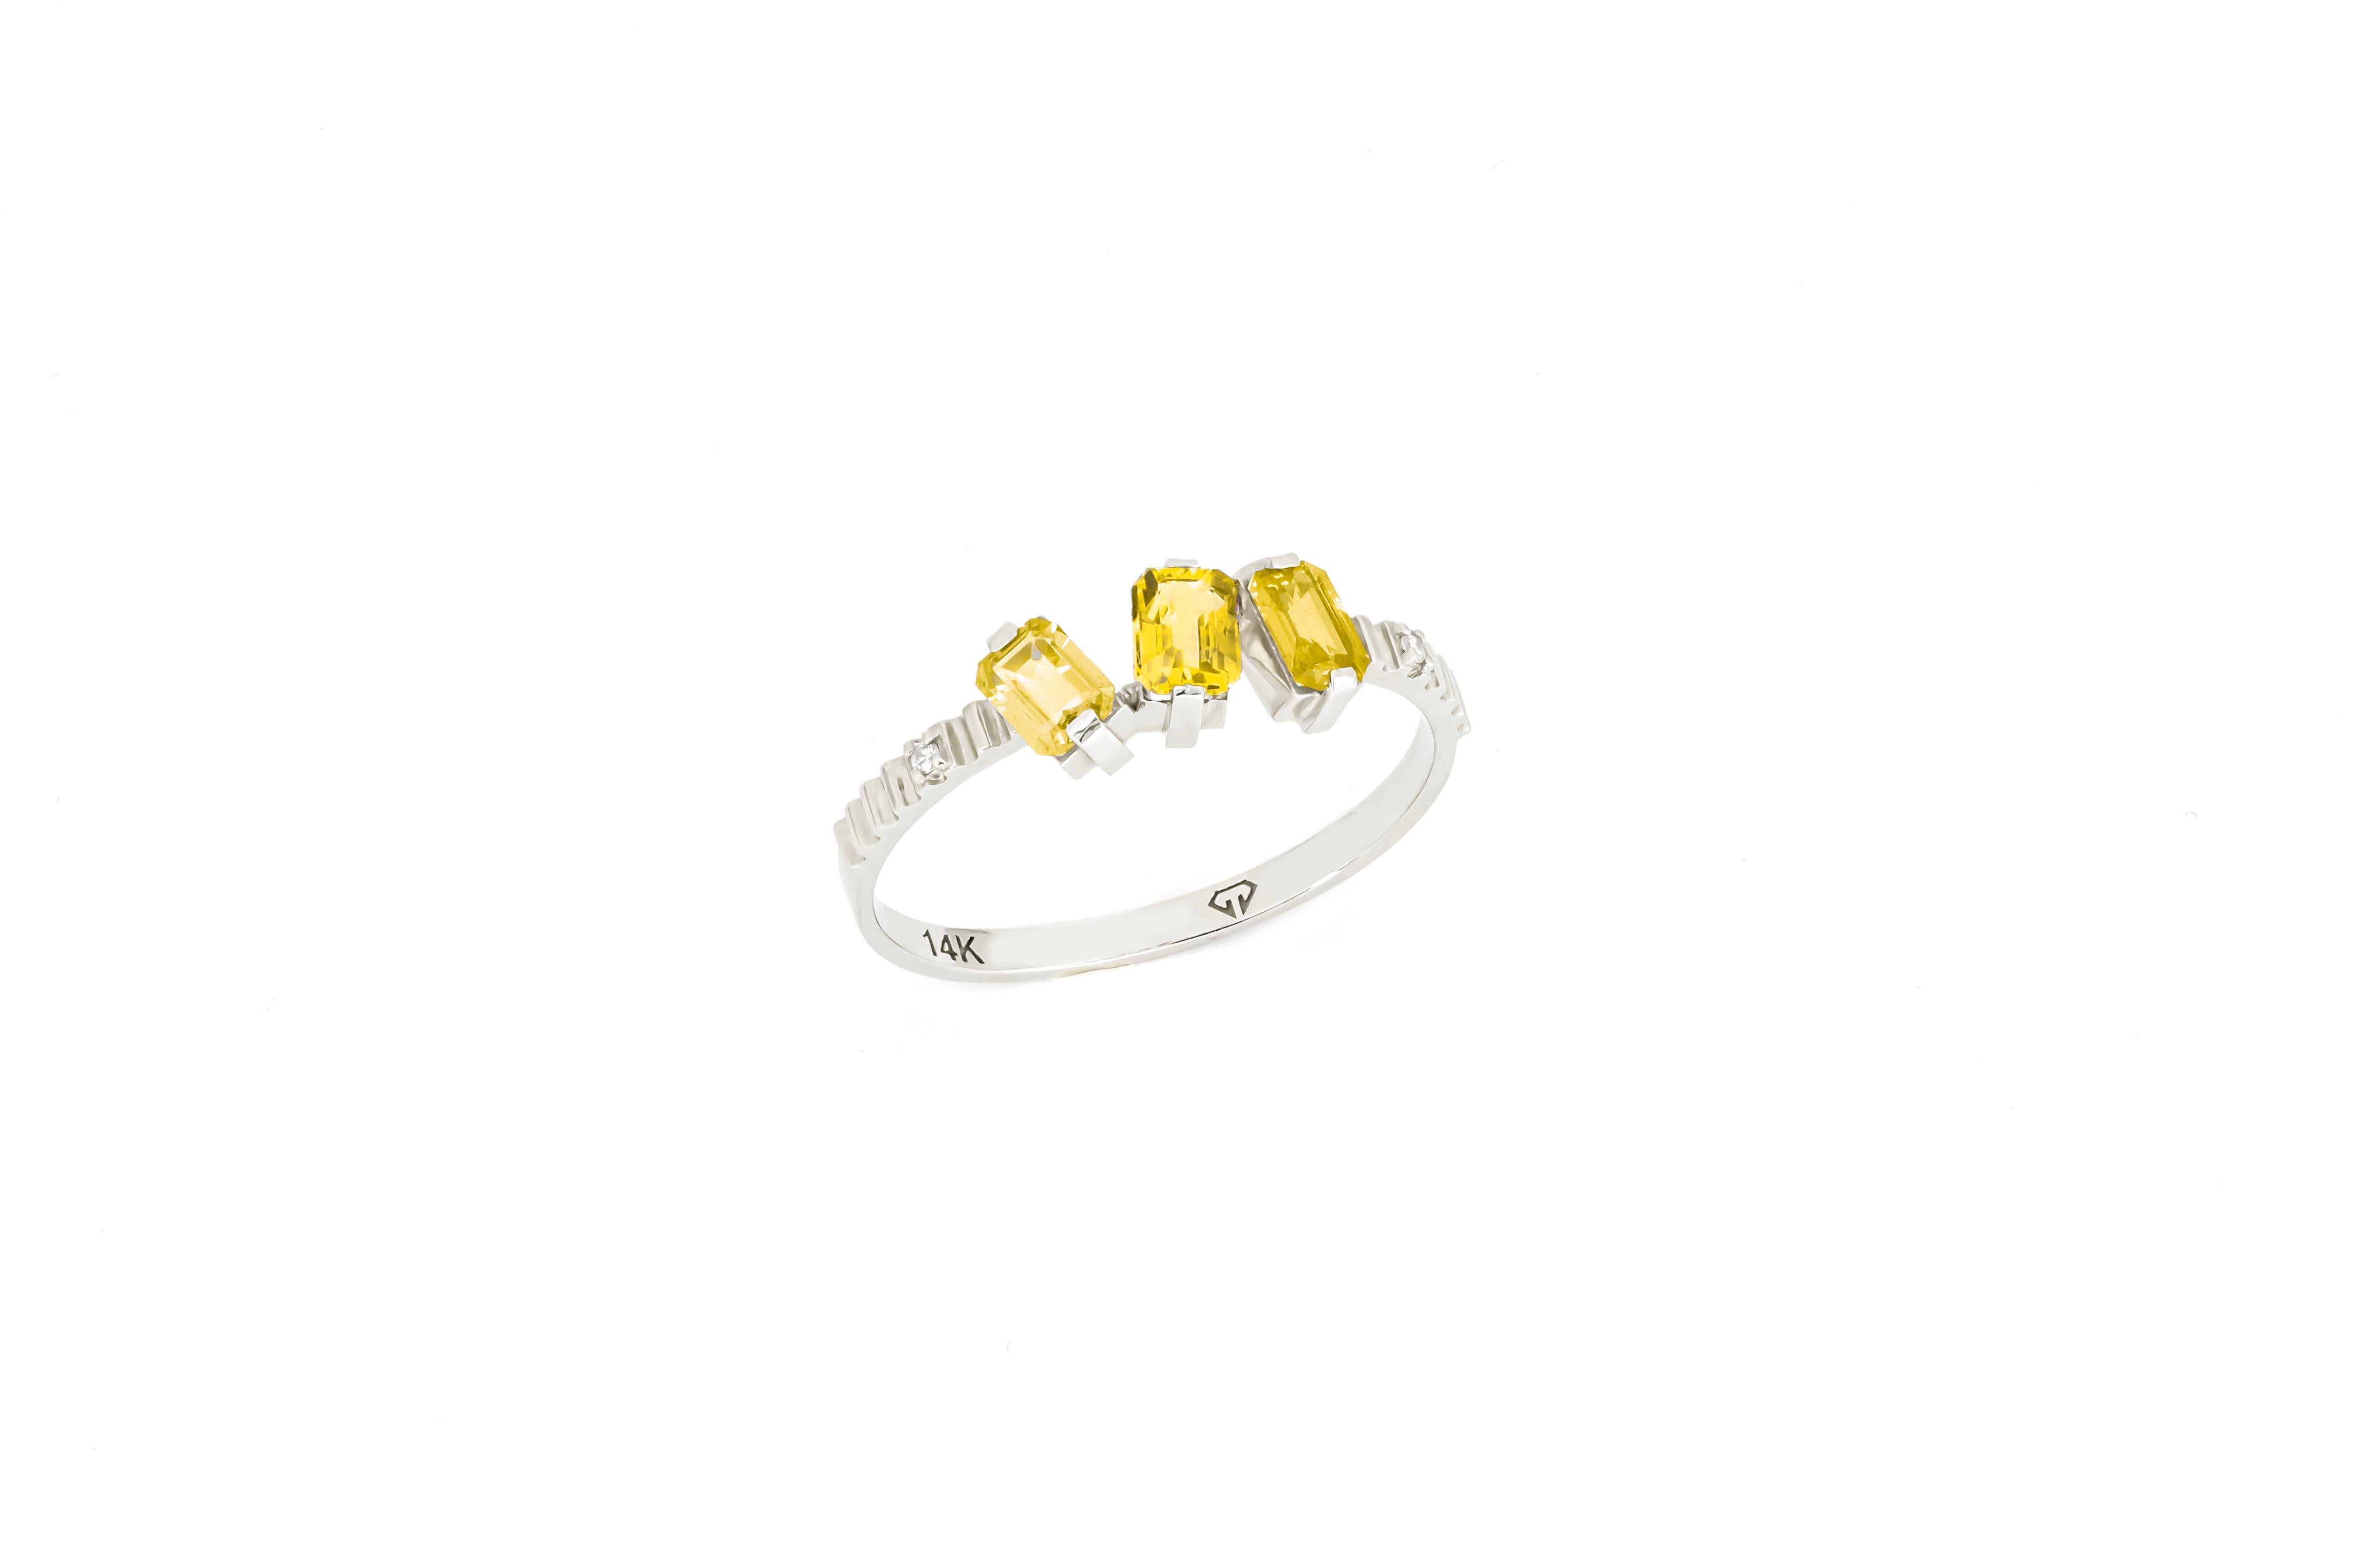 Women's Monochrome yellow gemstone 14k ring. For Sale